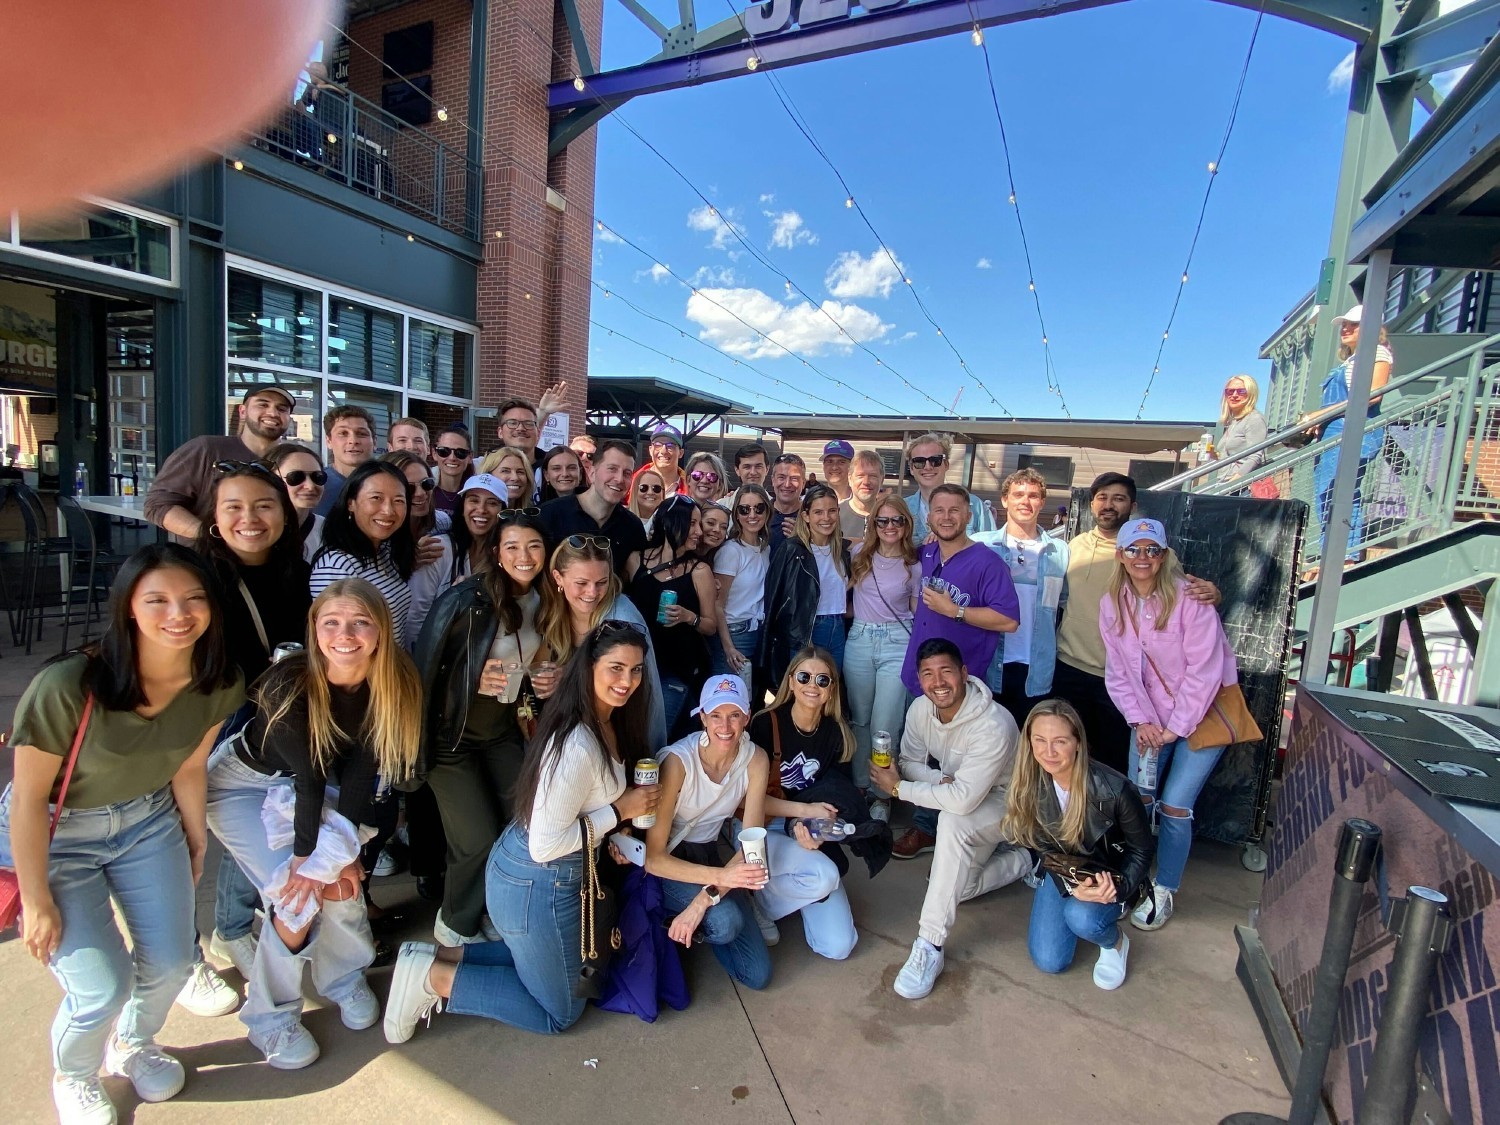 RevelOne Team at the Denver offsite retreat, attending a Colorado Rockies Baseball Game!